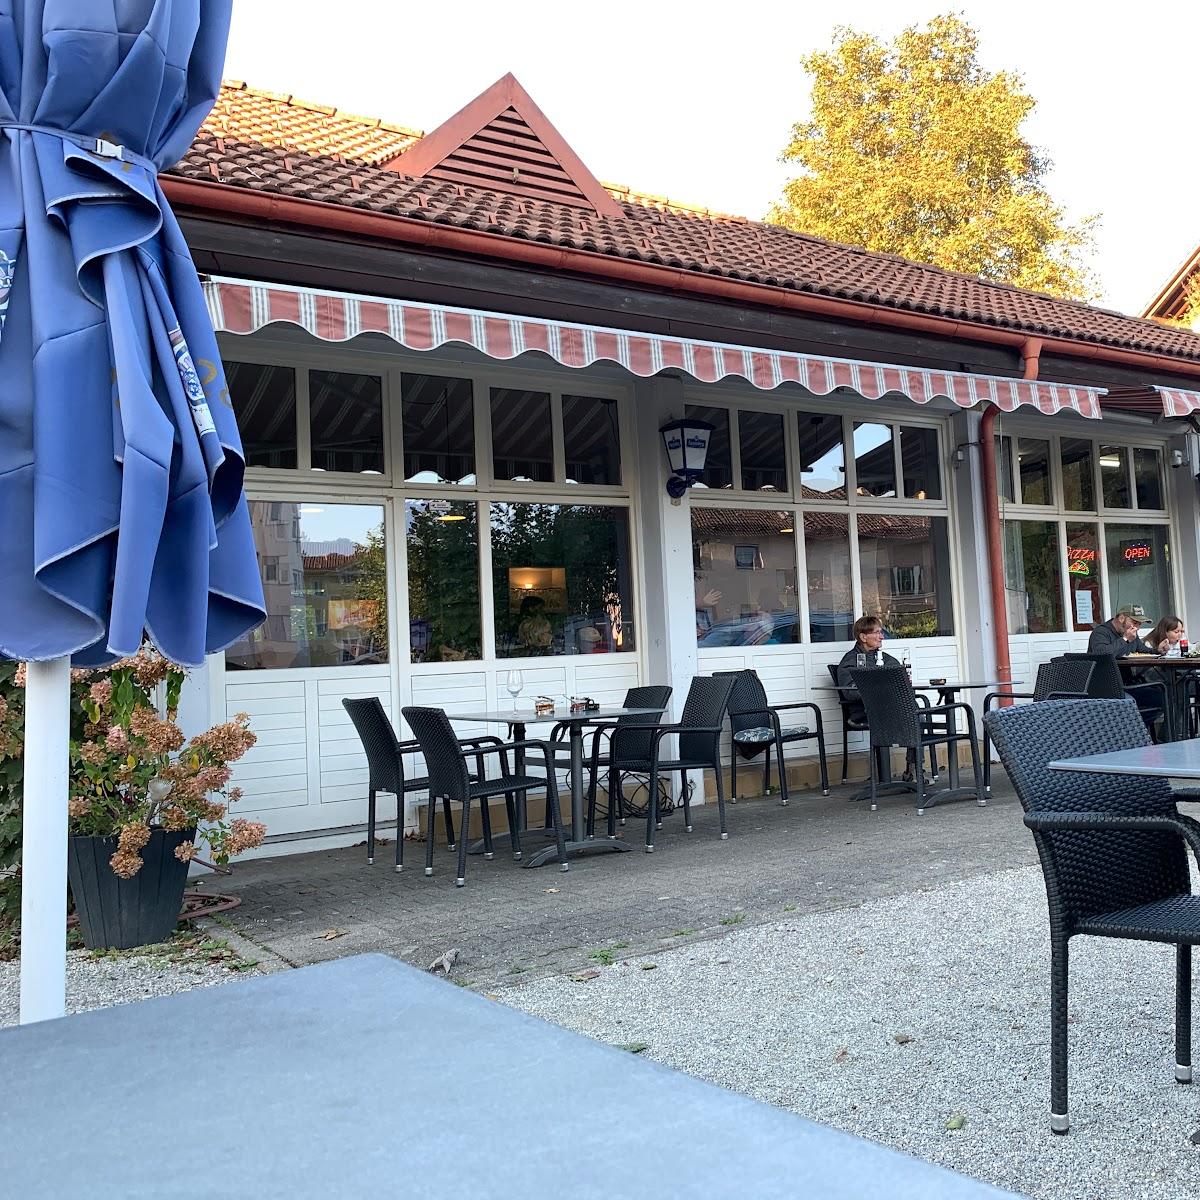 Restaurant "Ali Baba Kebap & Pizza" in Waldshut-Tiengen